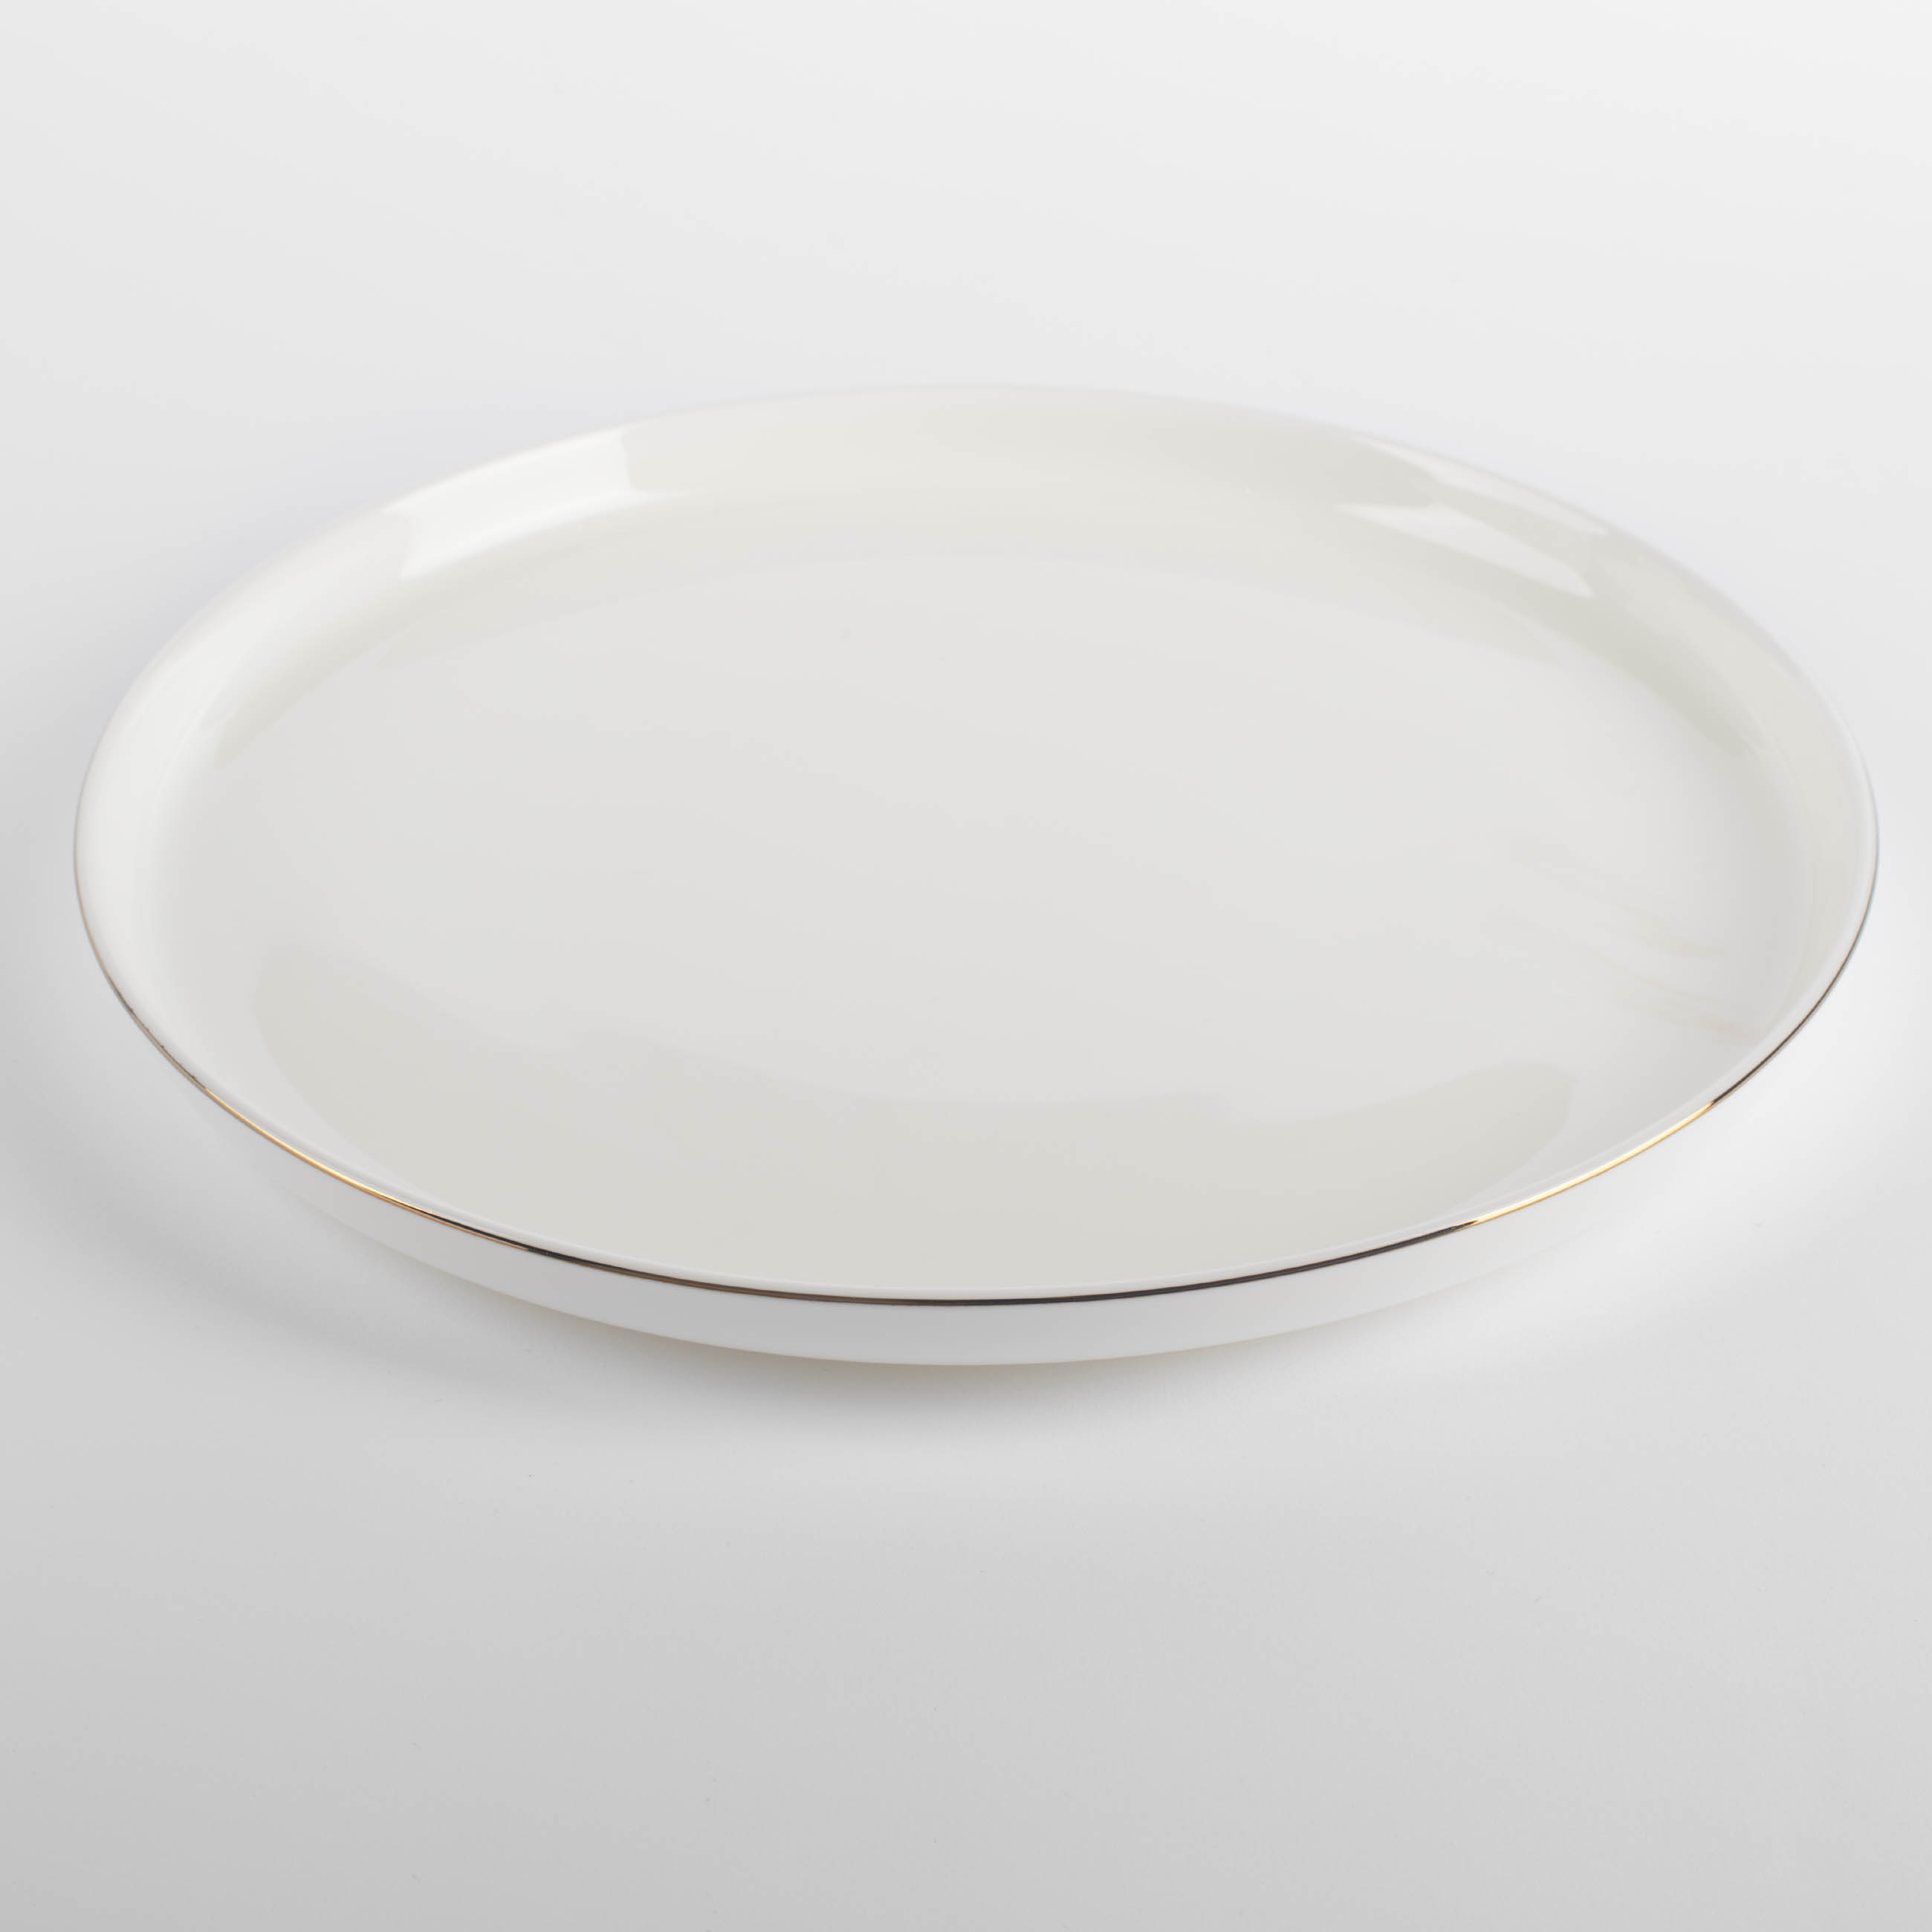 Dining plate, 26 cm, porcelain F, white, Ideal gold изображение № 2